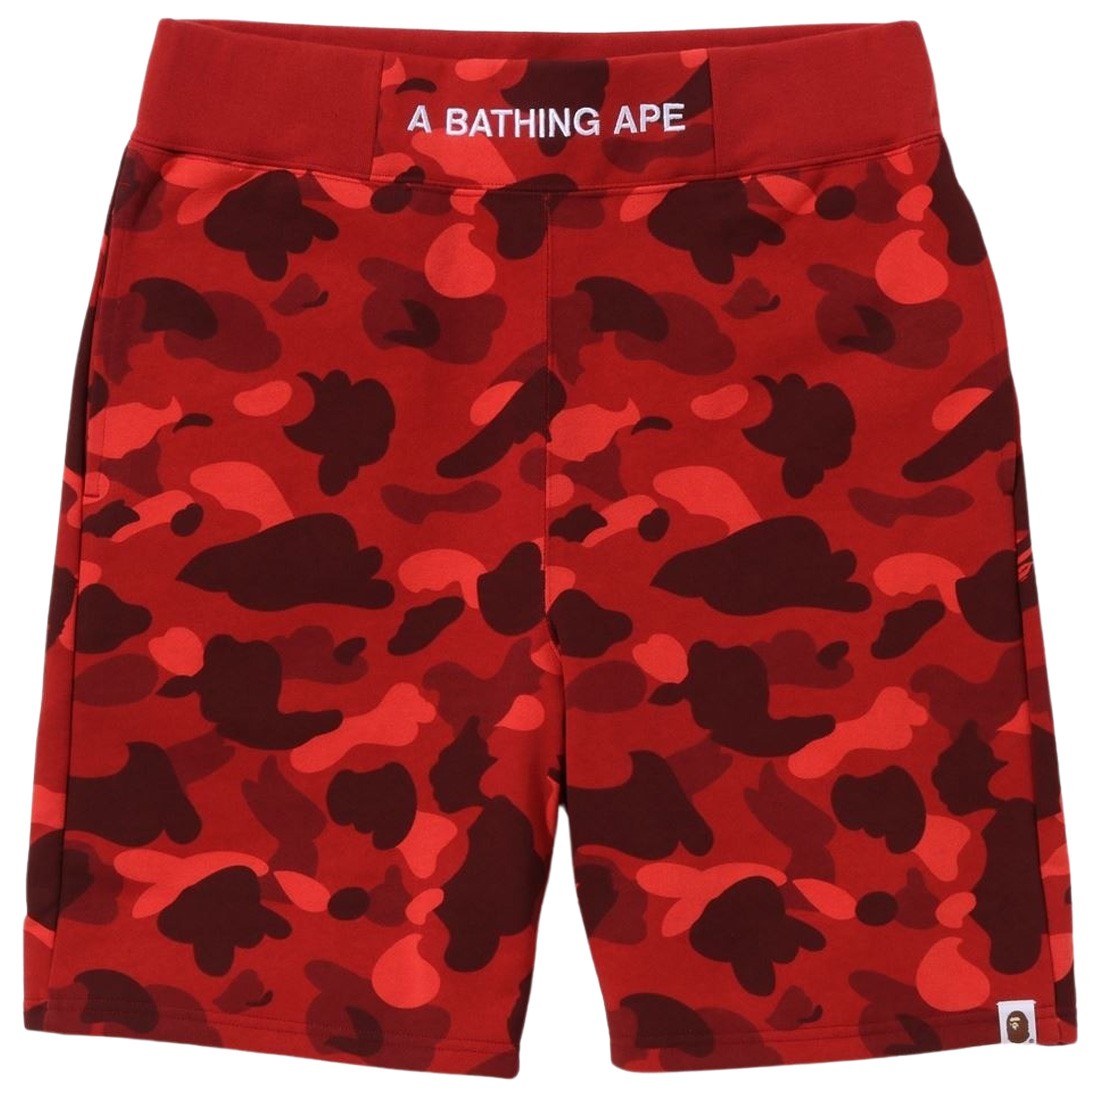 A Bathing Ape Men Color Camo Sweat Shorts red